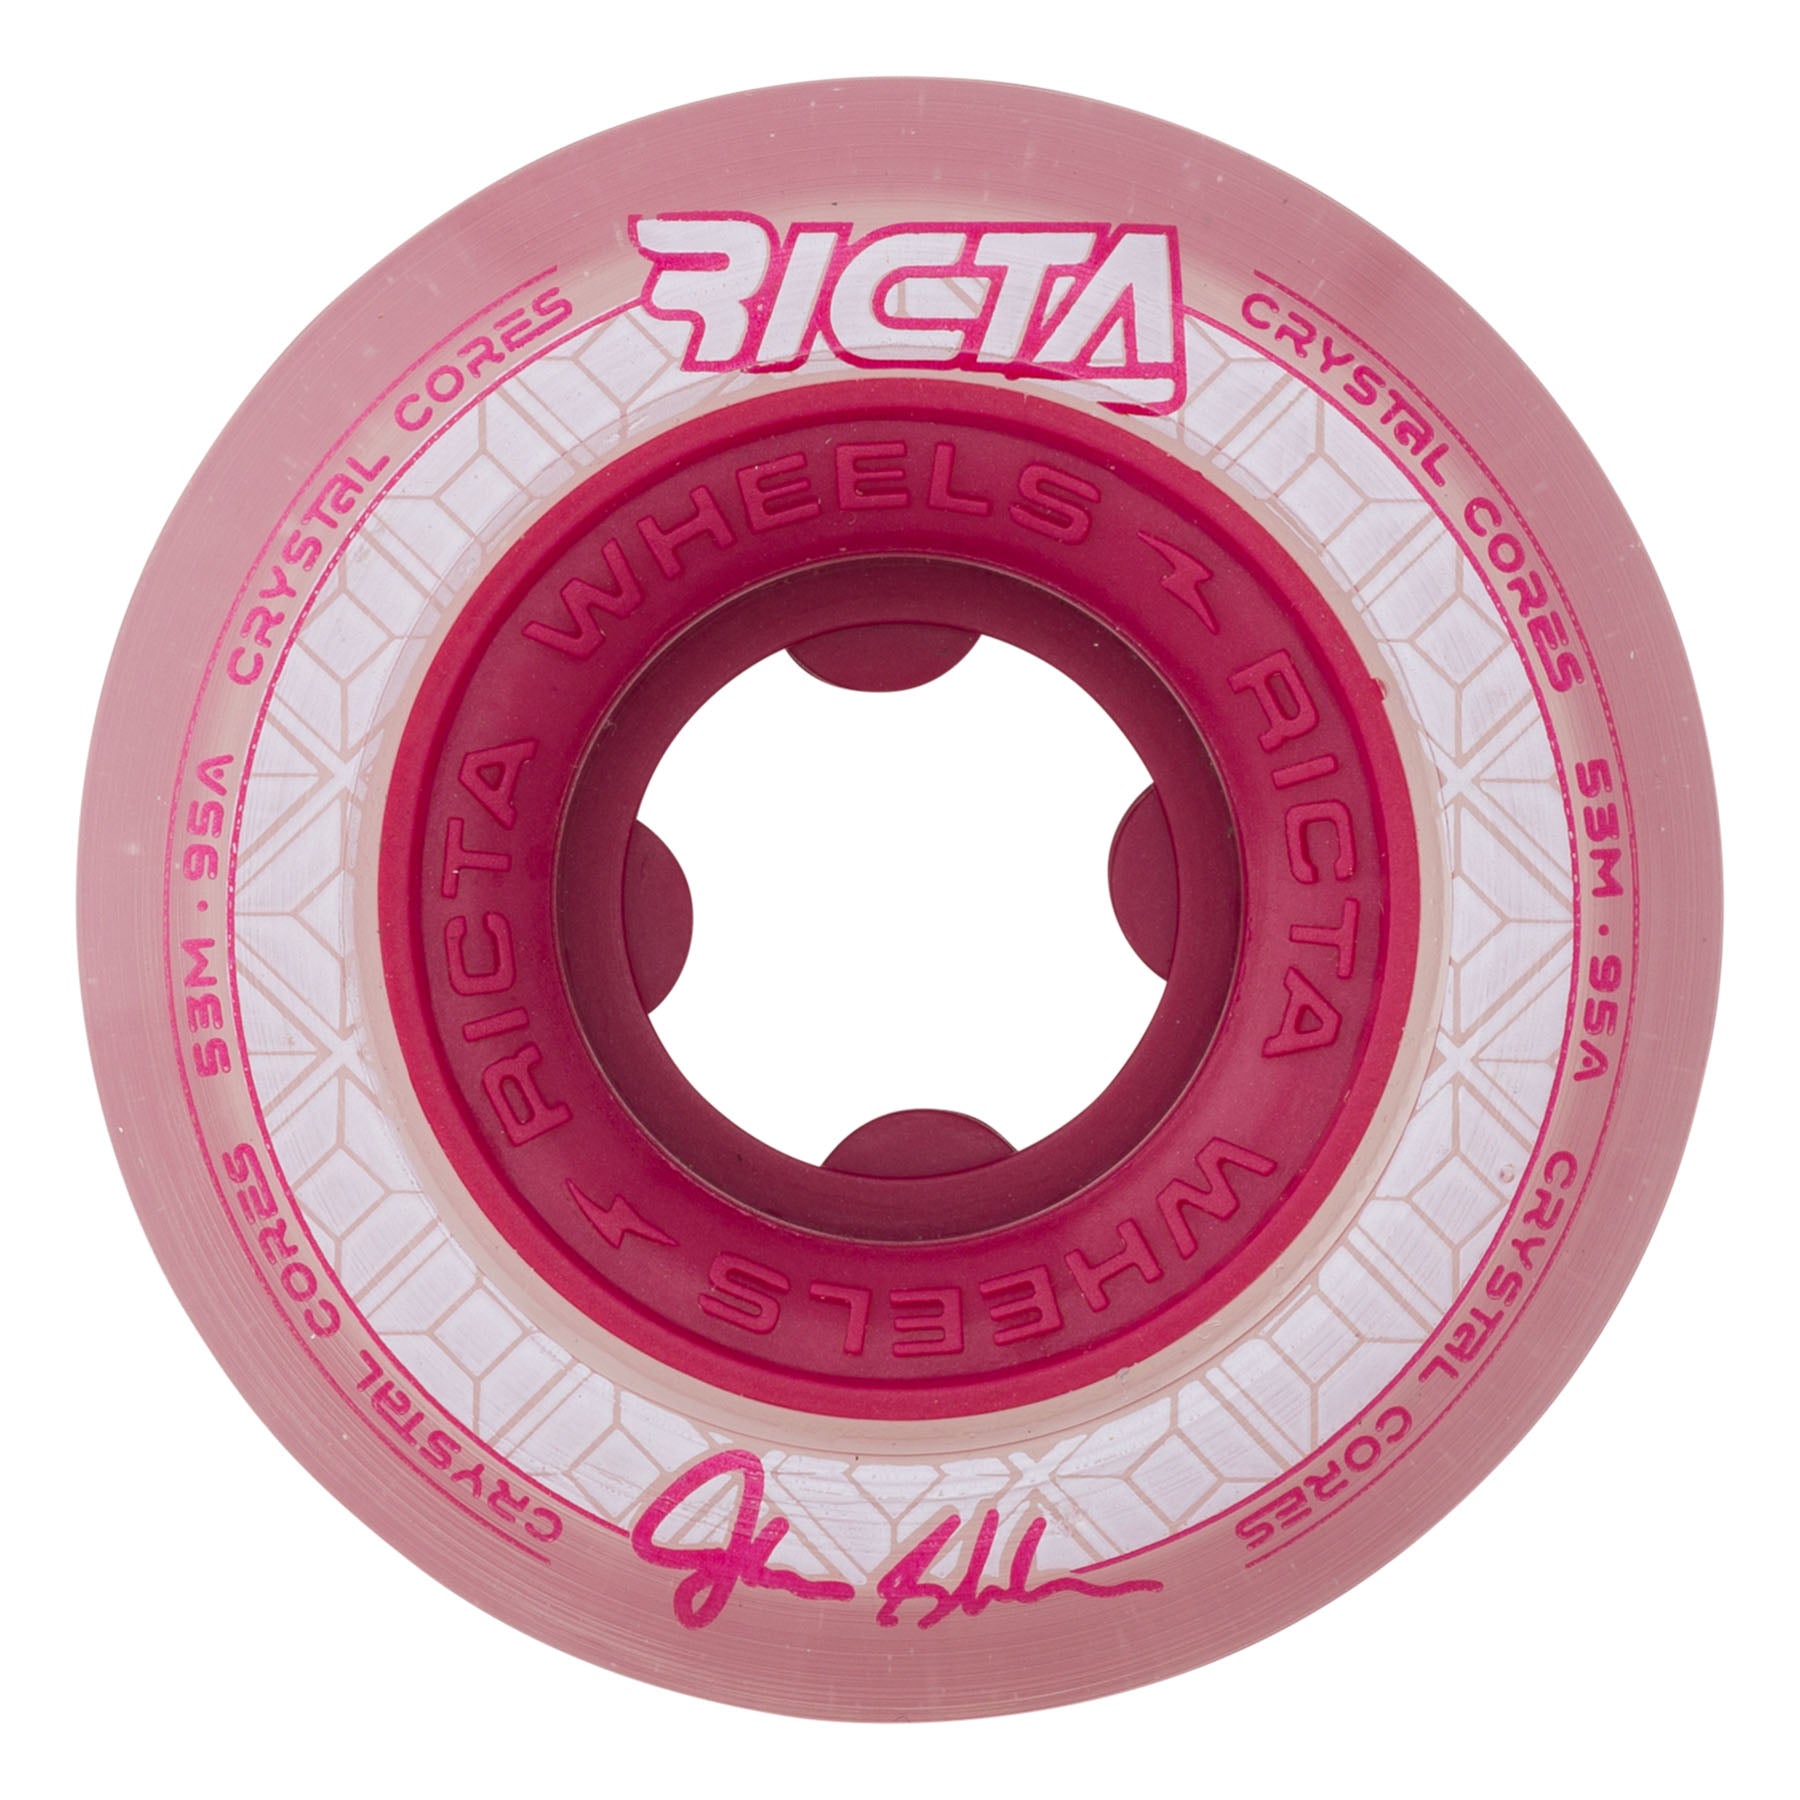 John Shanahan 95a Crystal Cores Ricta Skateboard Wheels